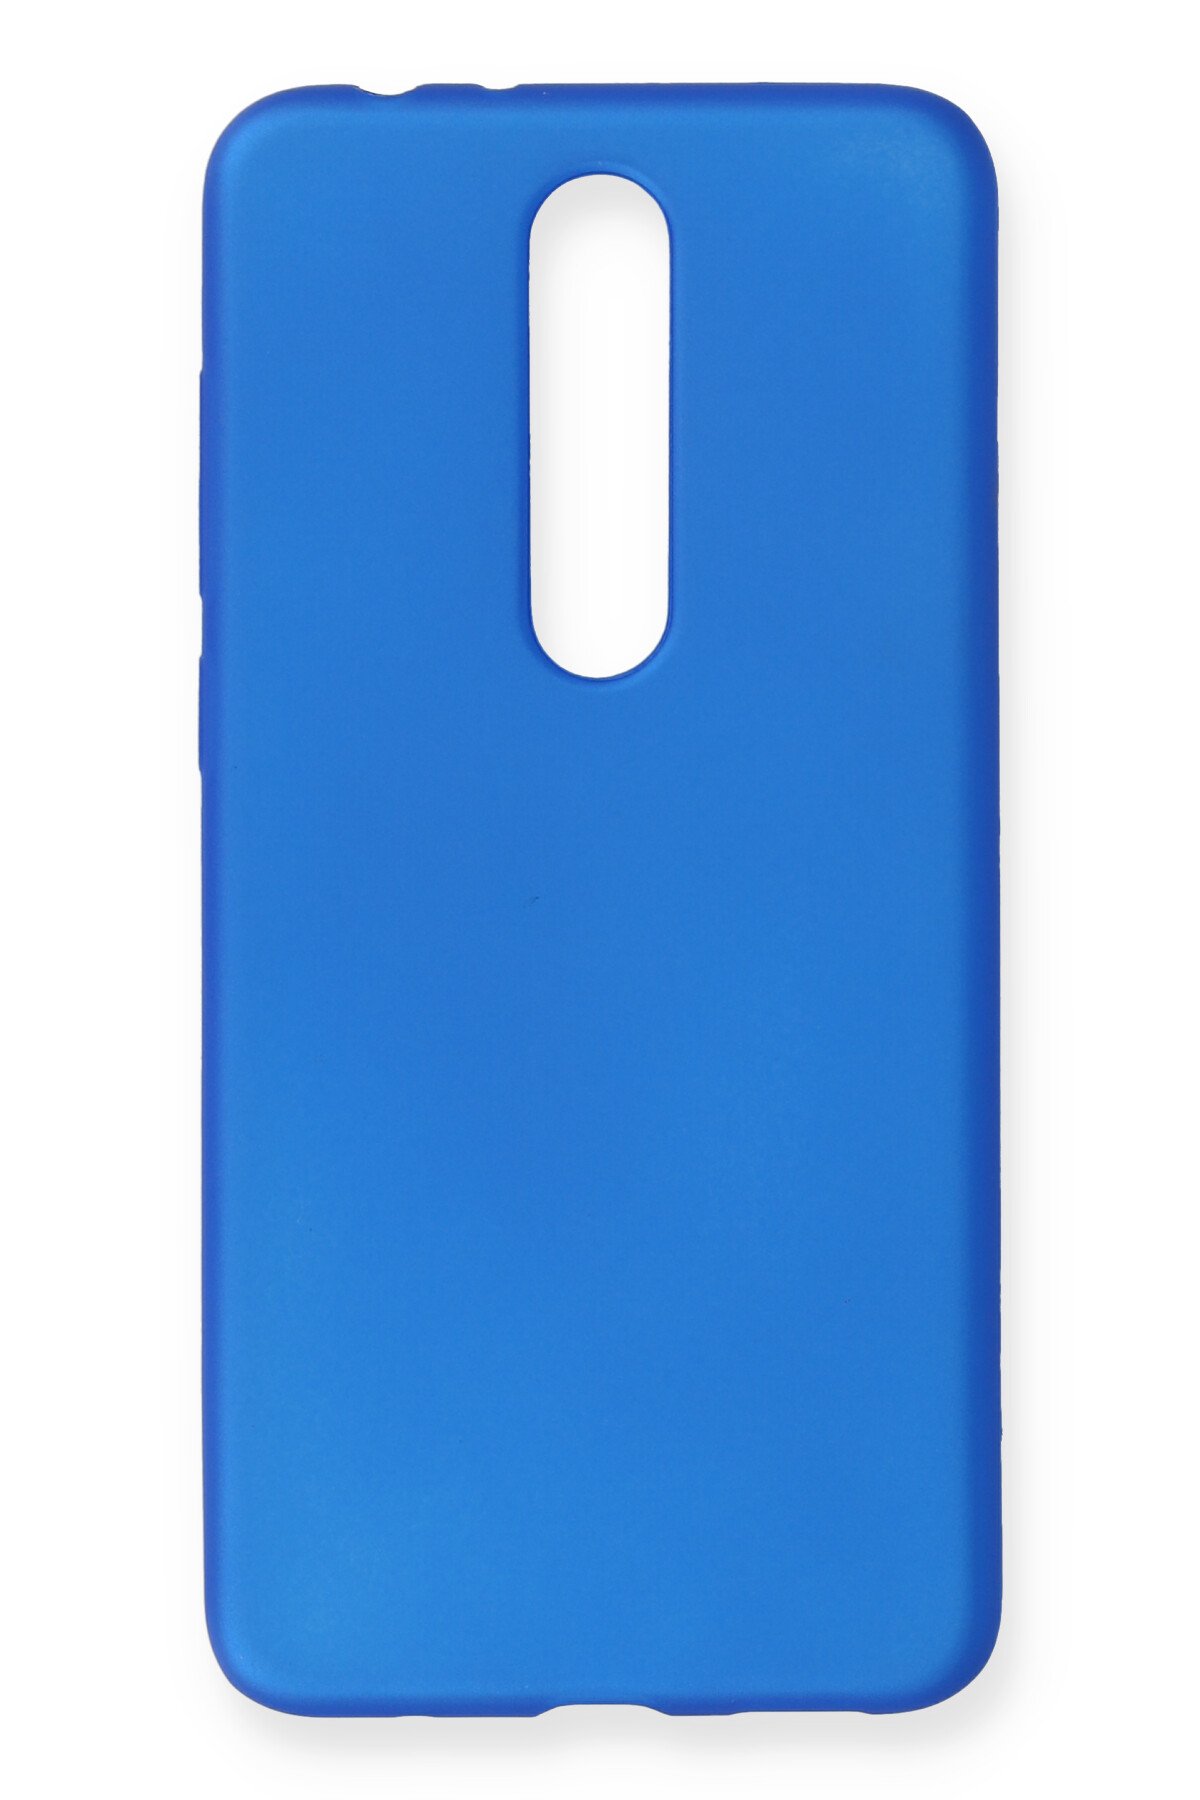 Newface Nokia Nokia 5.1 Plus Temperli Cam Ekran Koruyucu